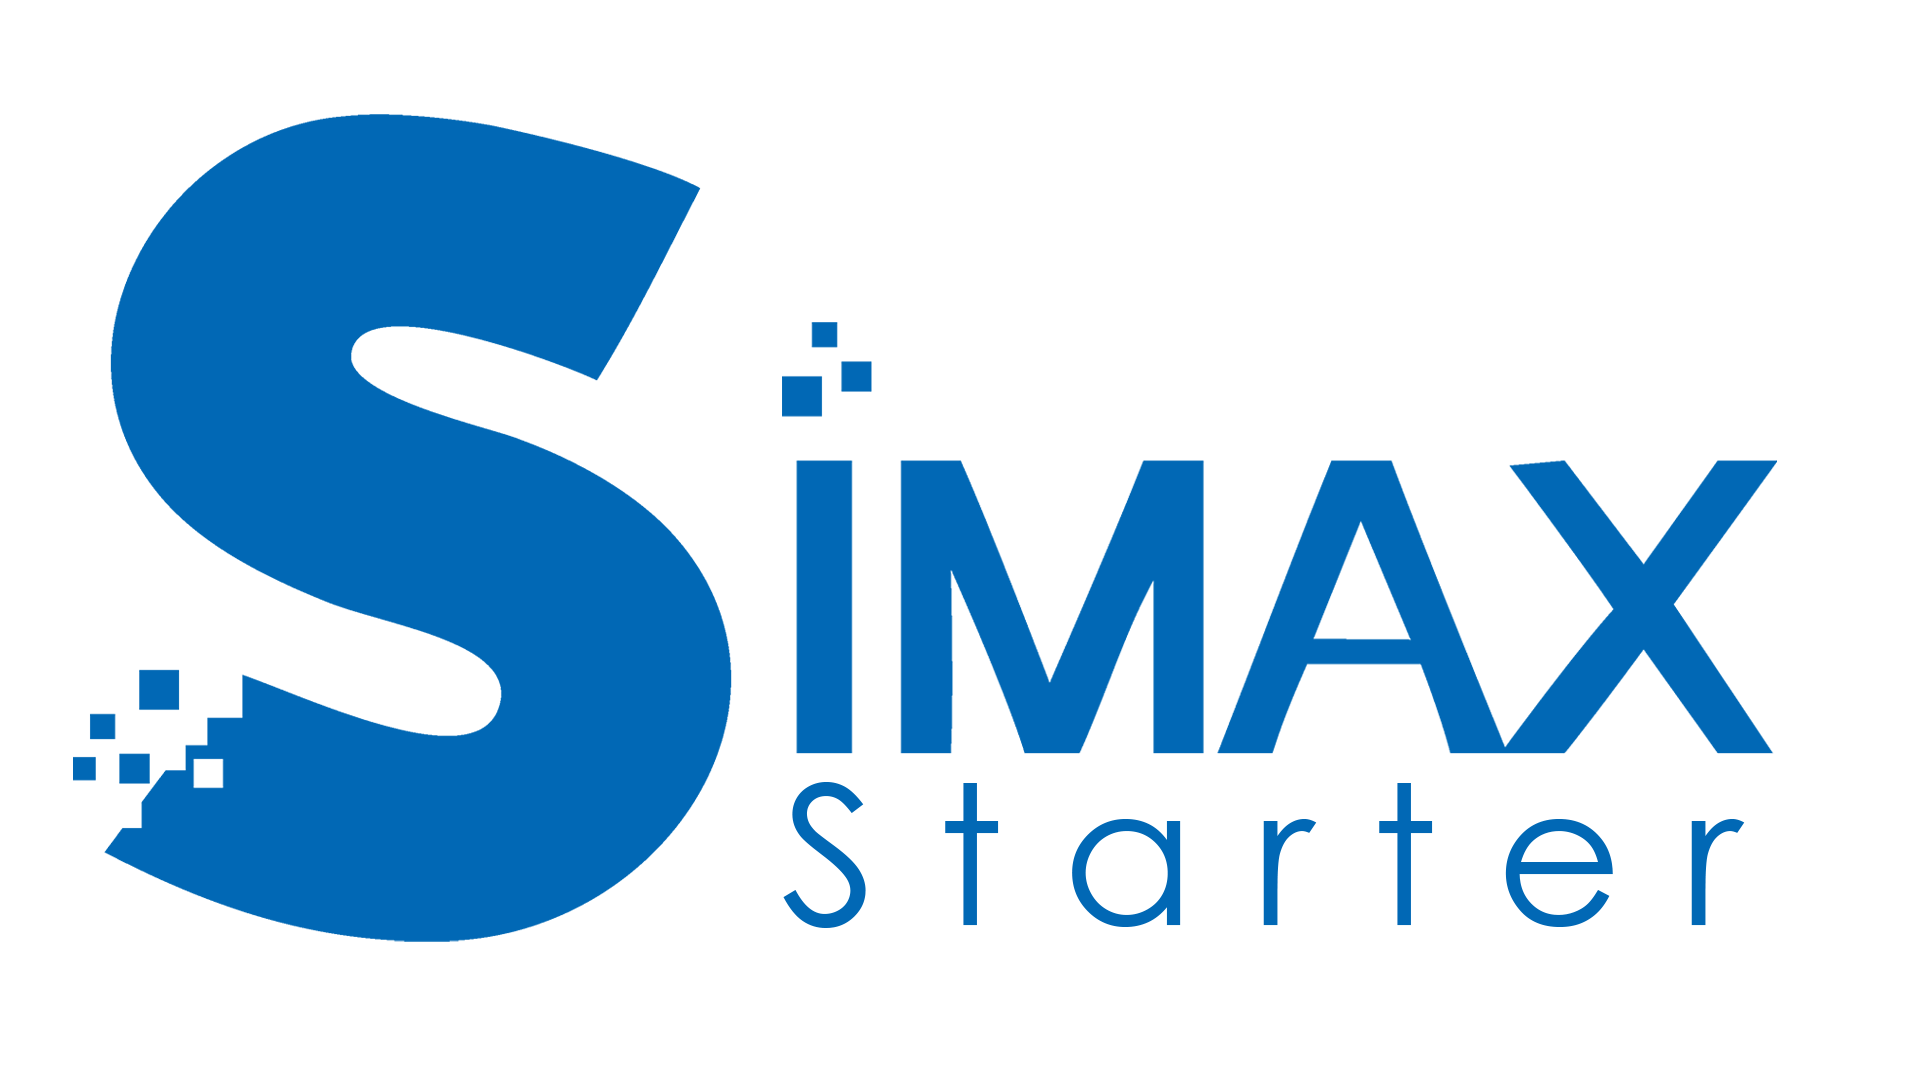 SIMAX-Starter